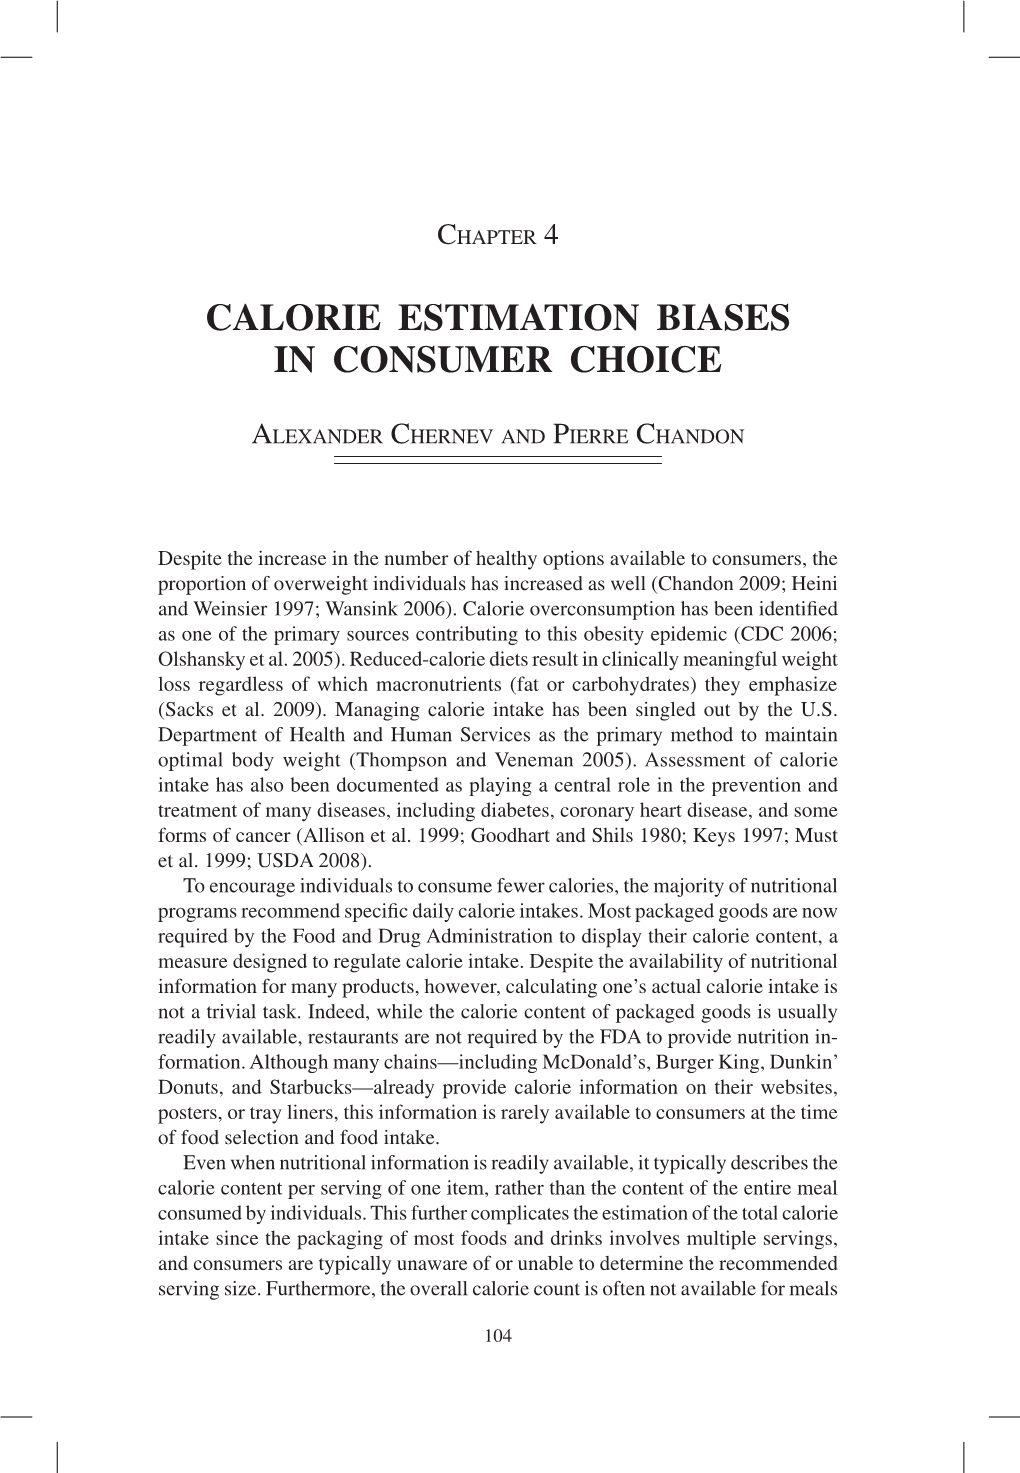 Calorie Estimation Biases in Consumer Choice